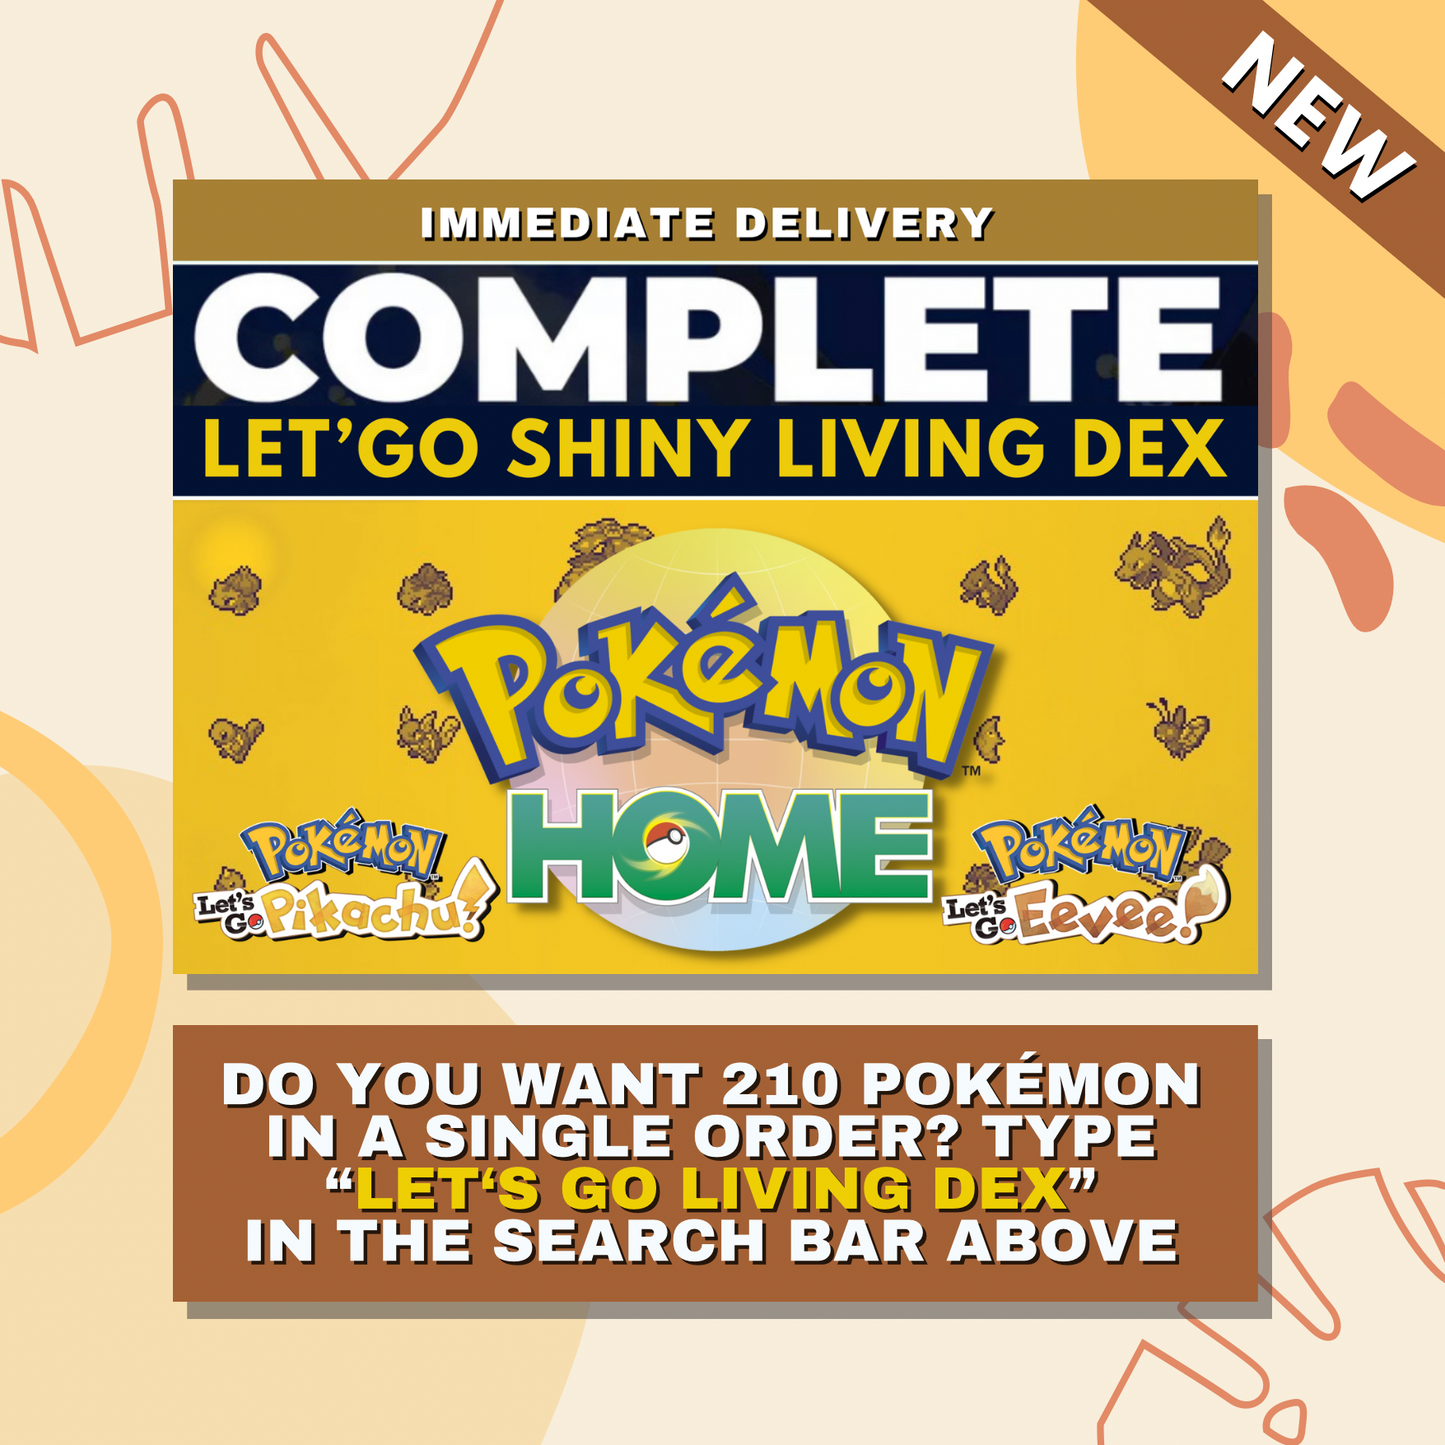 Mr Mime Shiny ✨ or Non Shiny Pokémon Let's Go Pikachu Eevee Level 100 Competitive Battle Ready 6 IV 100% Legit Legal Customizable Custom OT by Shiny Living Dex | Shiny Living Dex